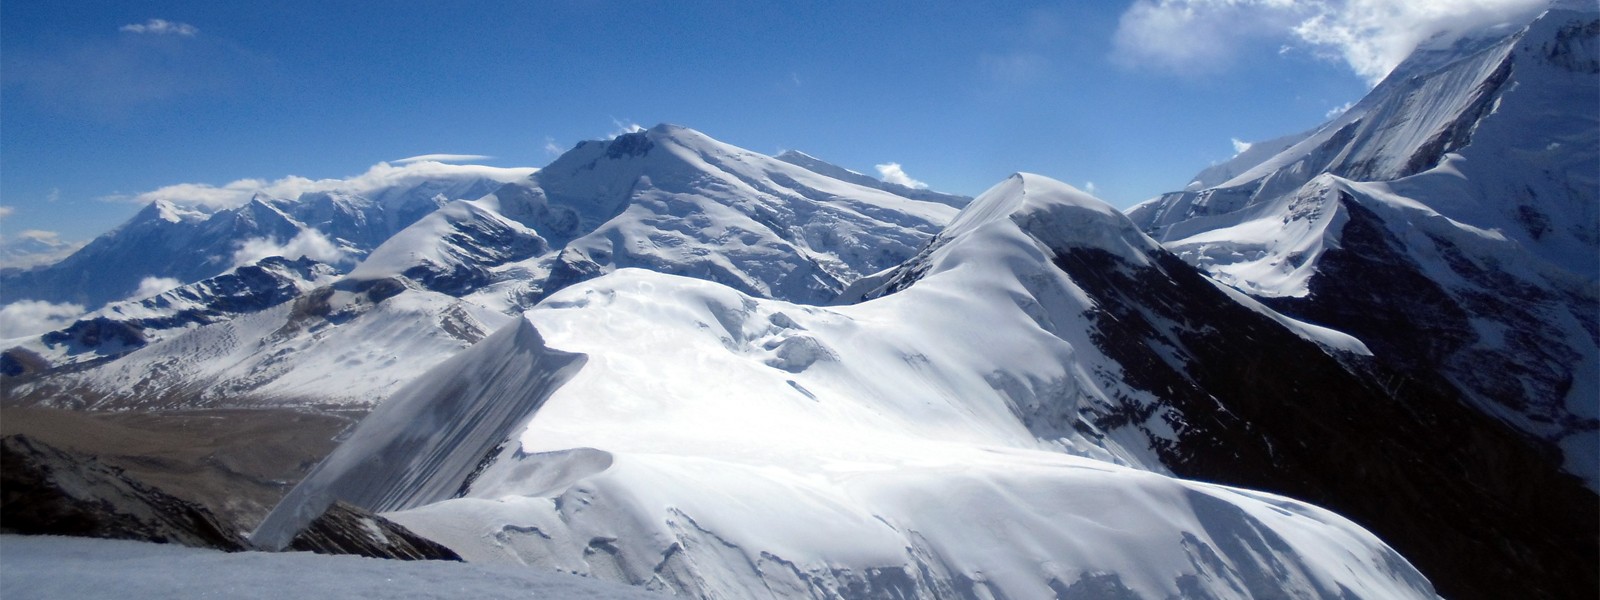 Mount. Mukot Himal Expedition